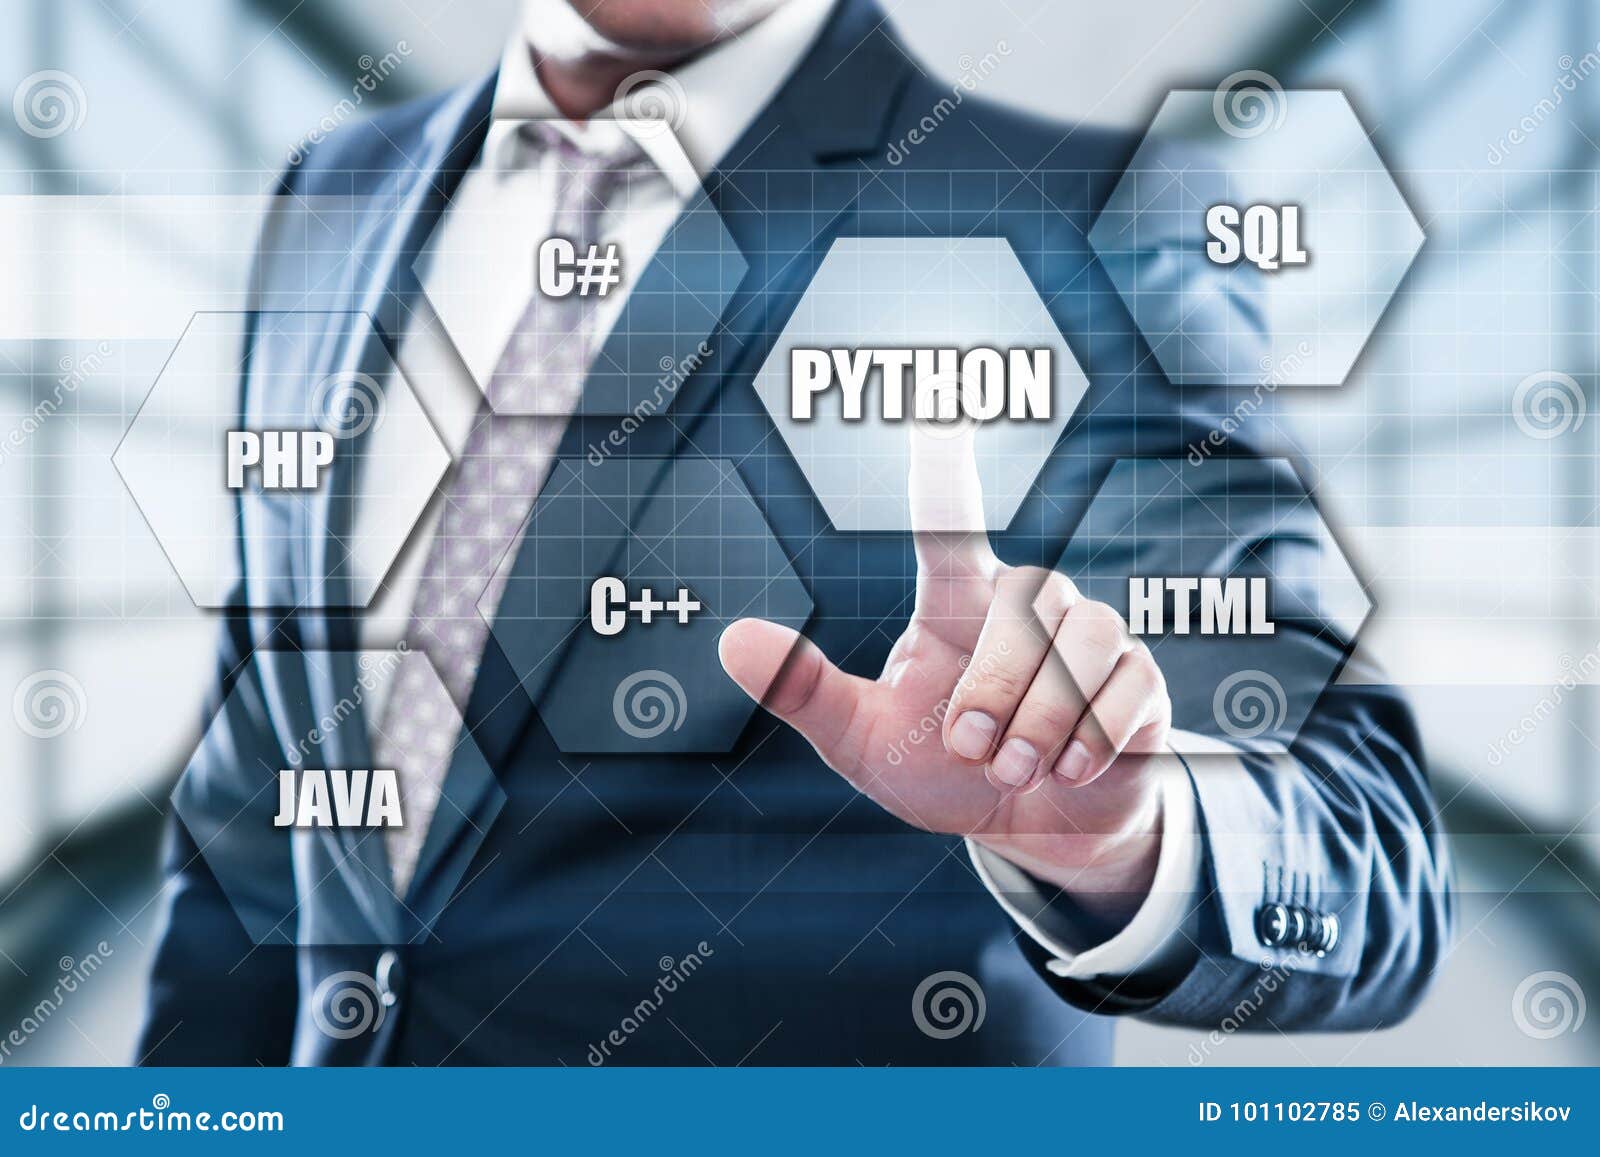 python programming language web development coding concept